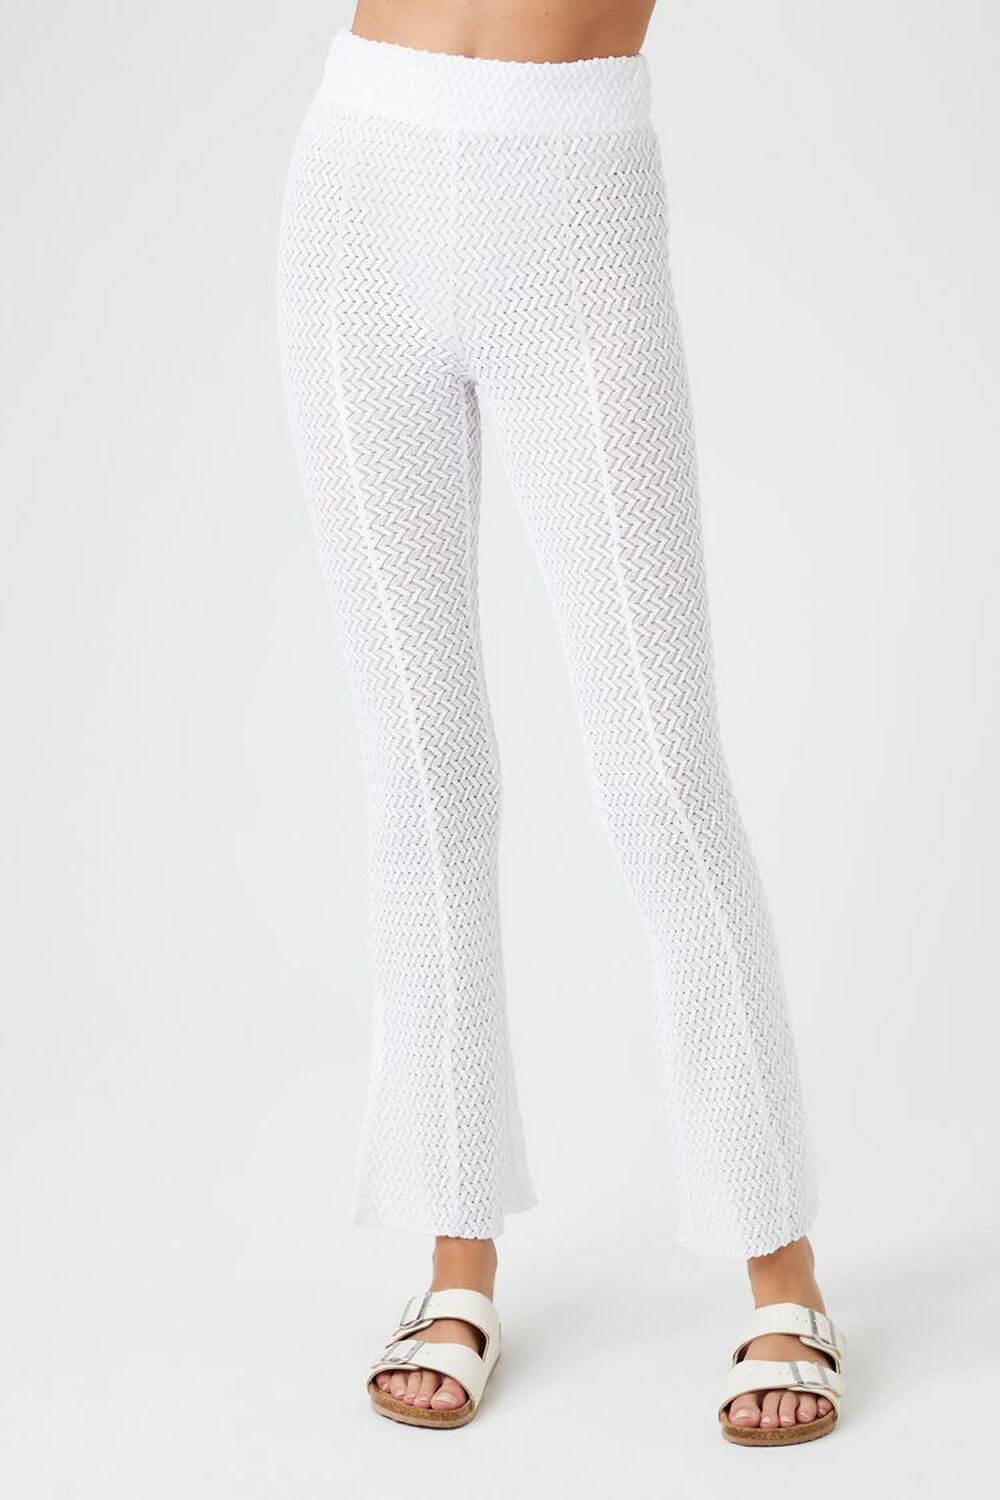 WHITE Crochet Flare Pants, image 2